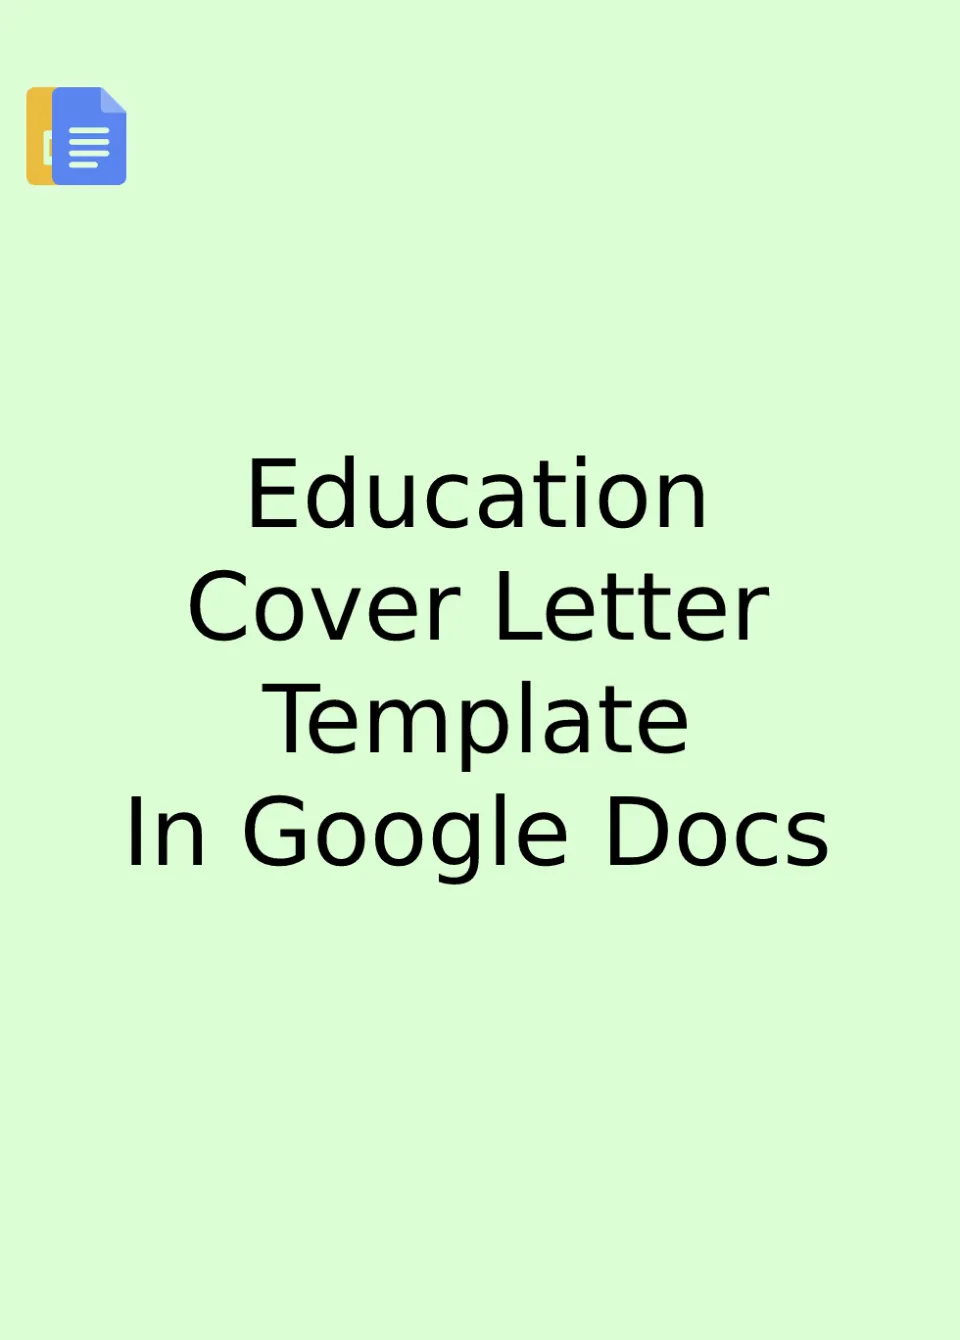 Education Cover Letter Template Google Docs